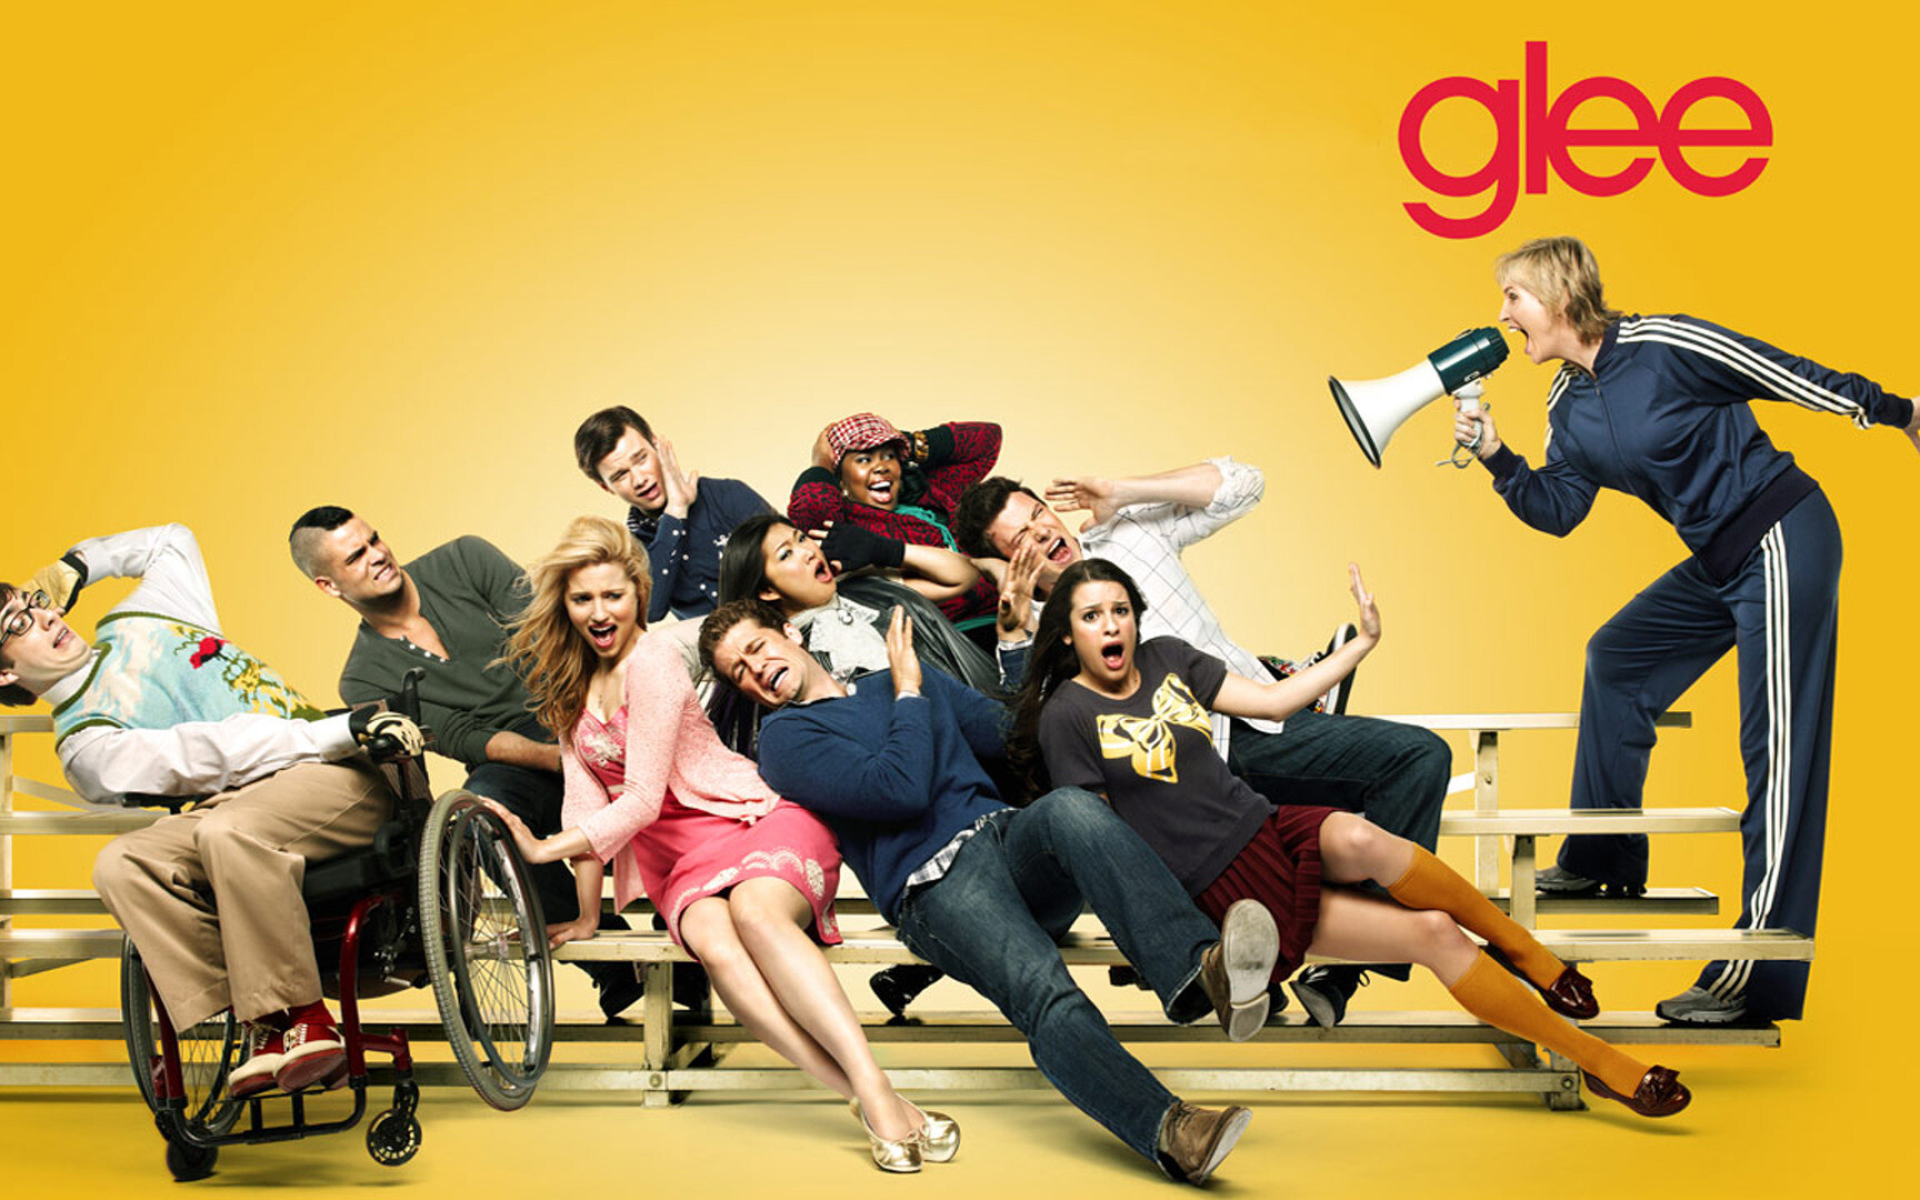 Glee (TV series): Dianna Agron, Chris Colfer, Kevin McHale, Matthew Morrison, Cory Monteith. 1920x1200 HD Wallpaper.